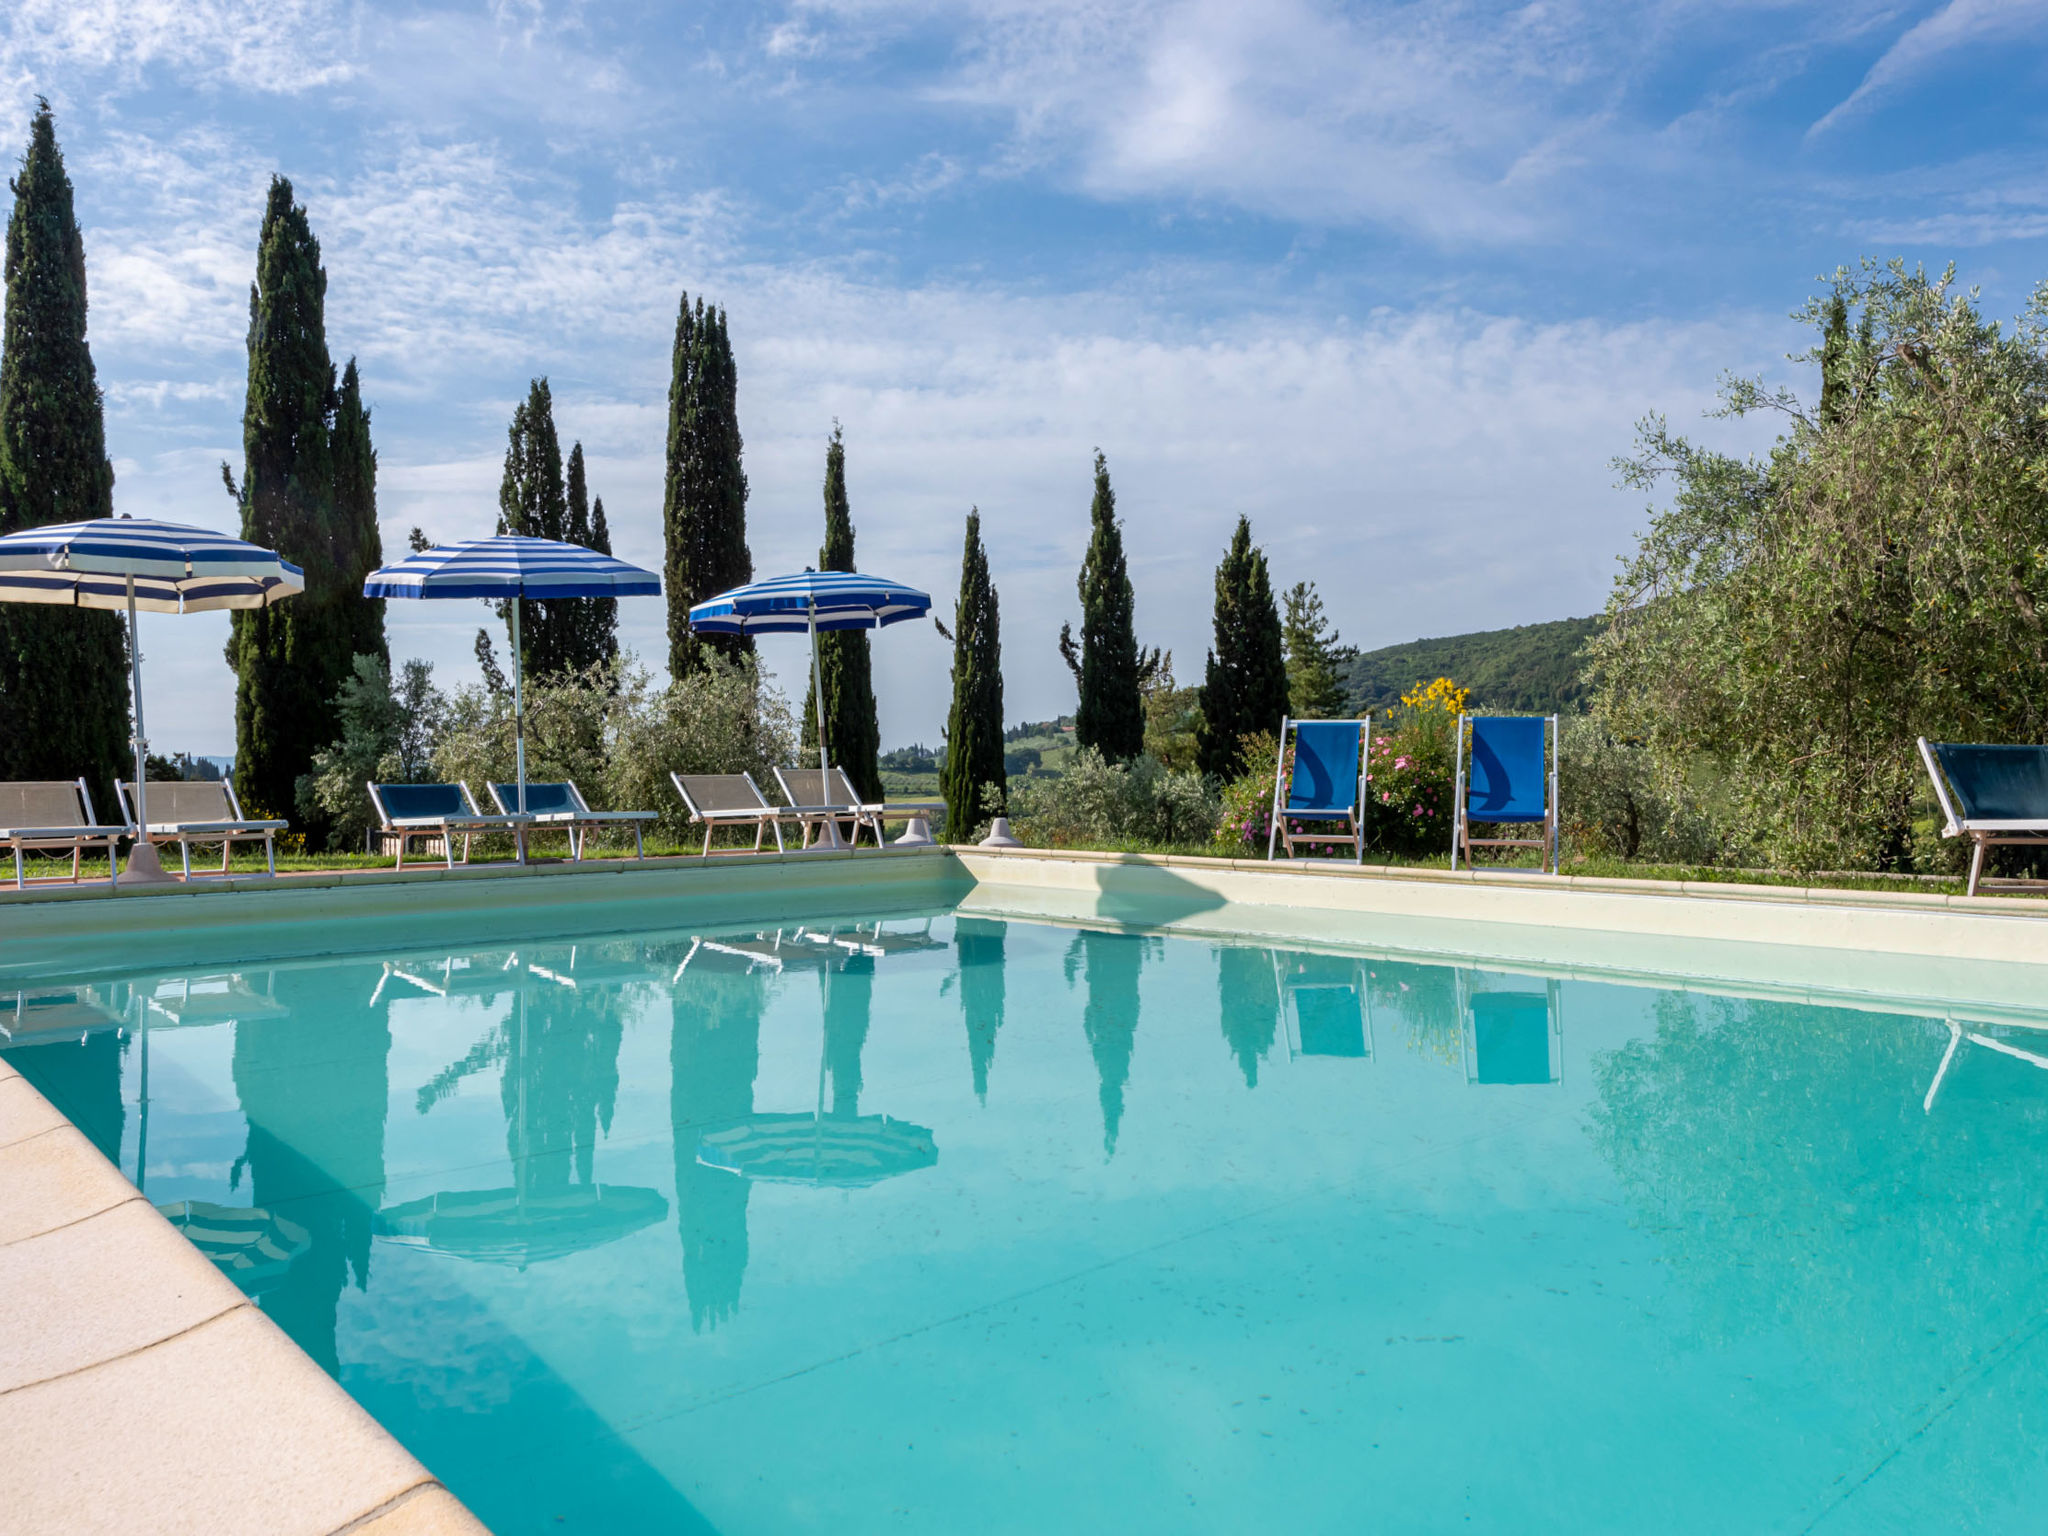 Foto 51 - Casa con 4 camere da letto a San Gimignano con piscina e giardino